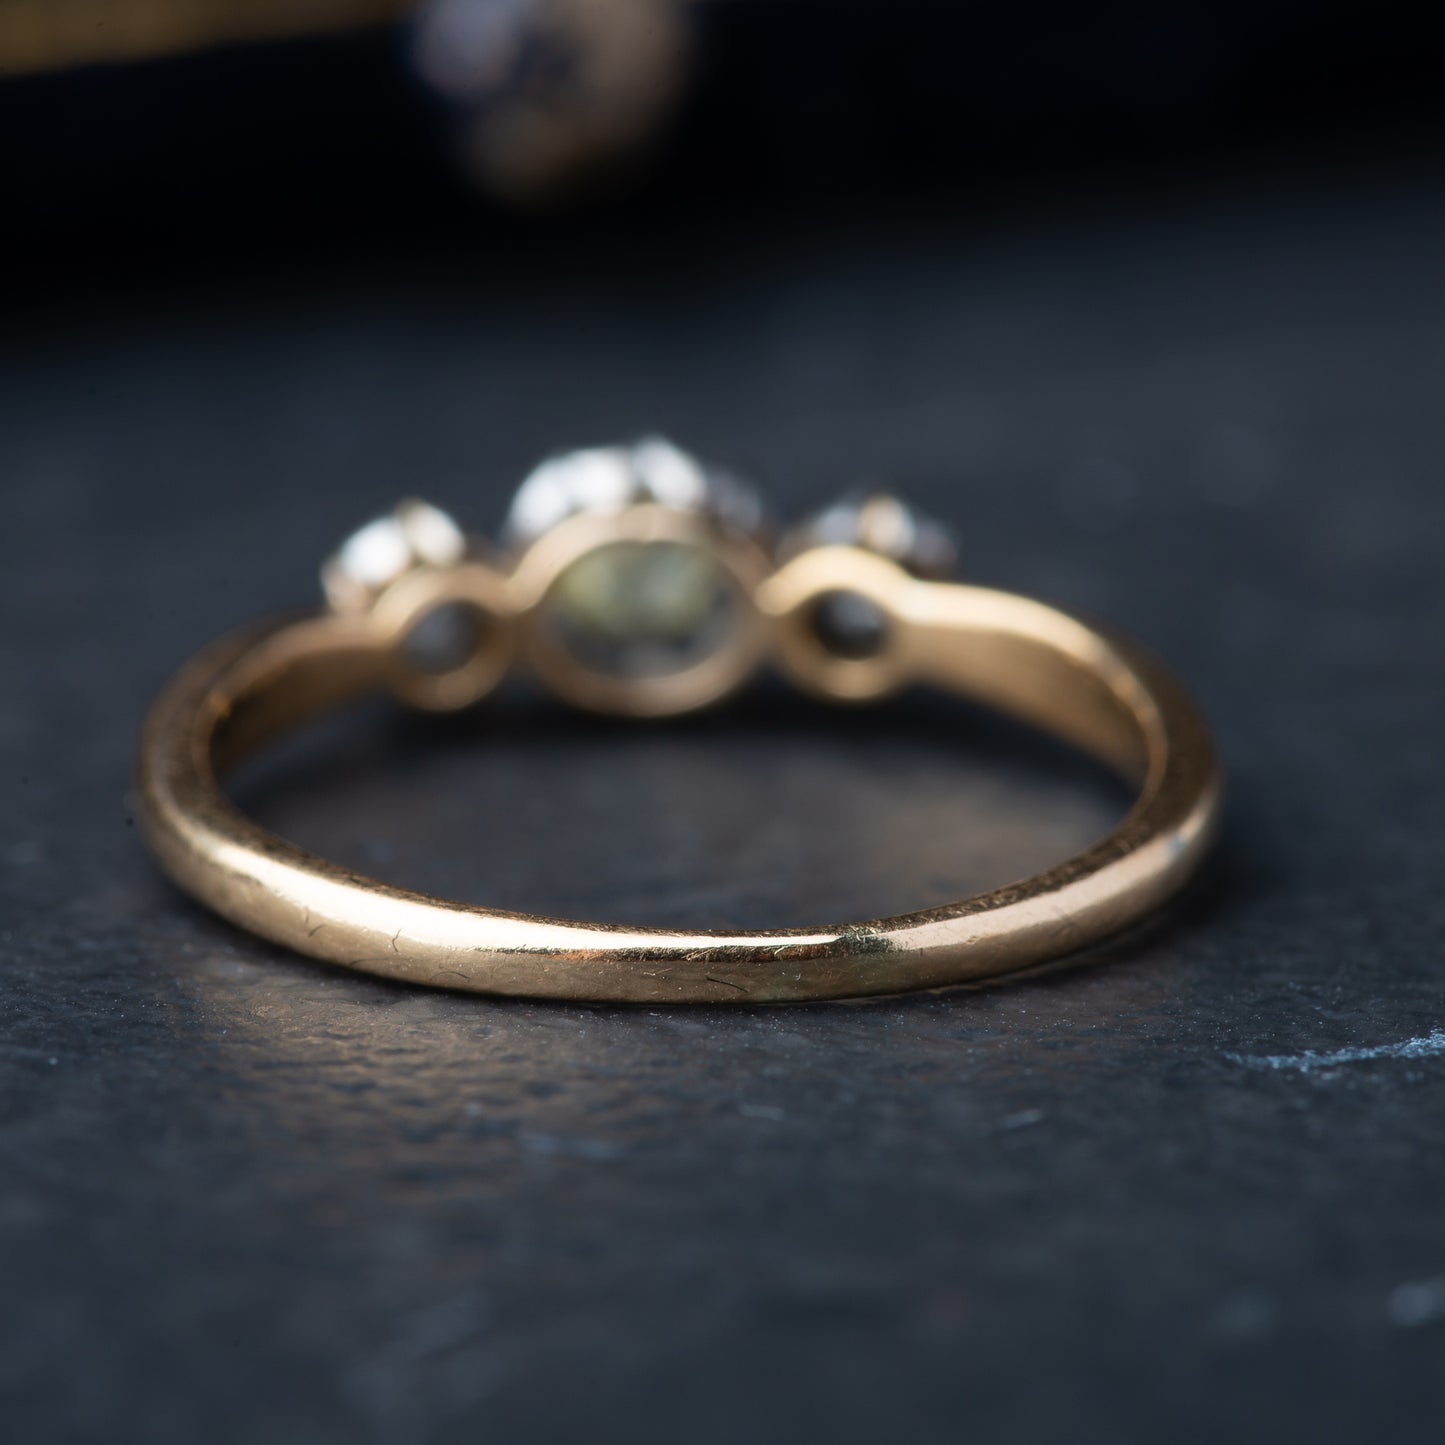 1900's Edwardian Trilogy Diamond Ring